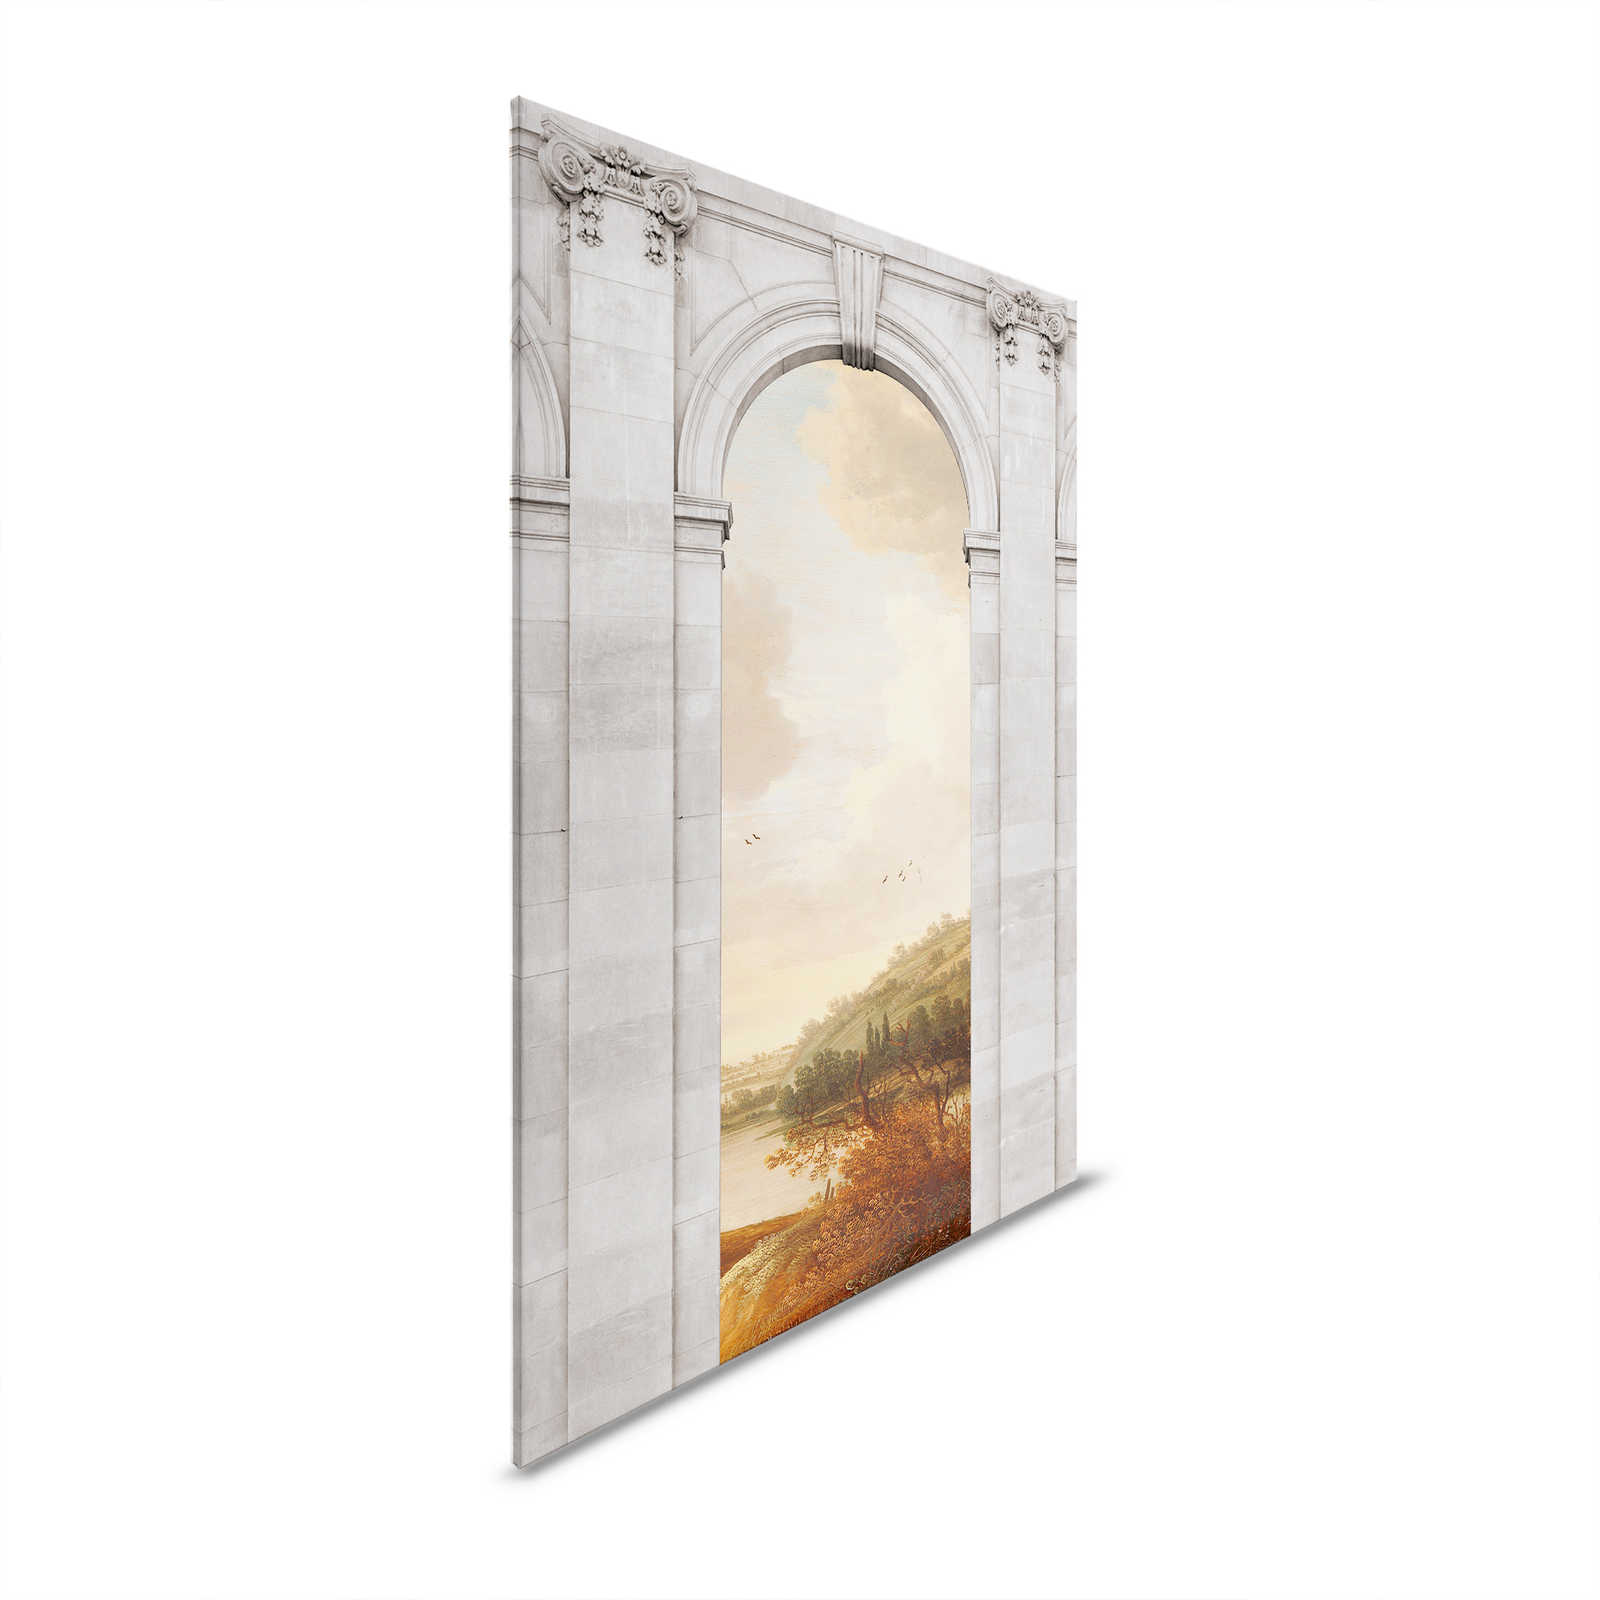 Castello 1 - Canvas schilderij Landschap & Architectuur - 1.20 m x 0.80 m
